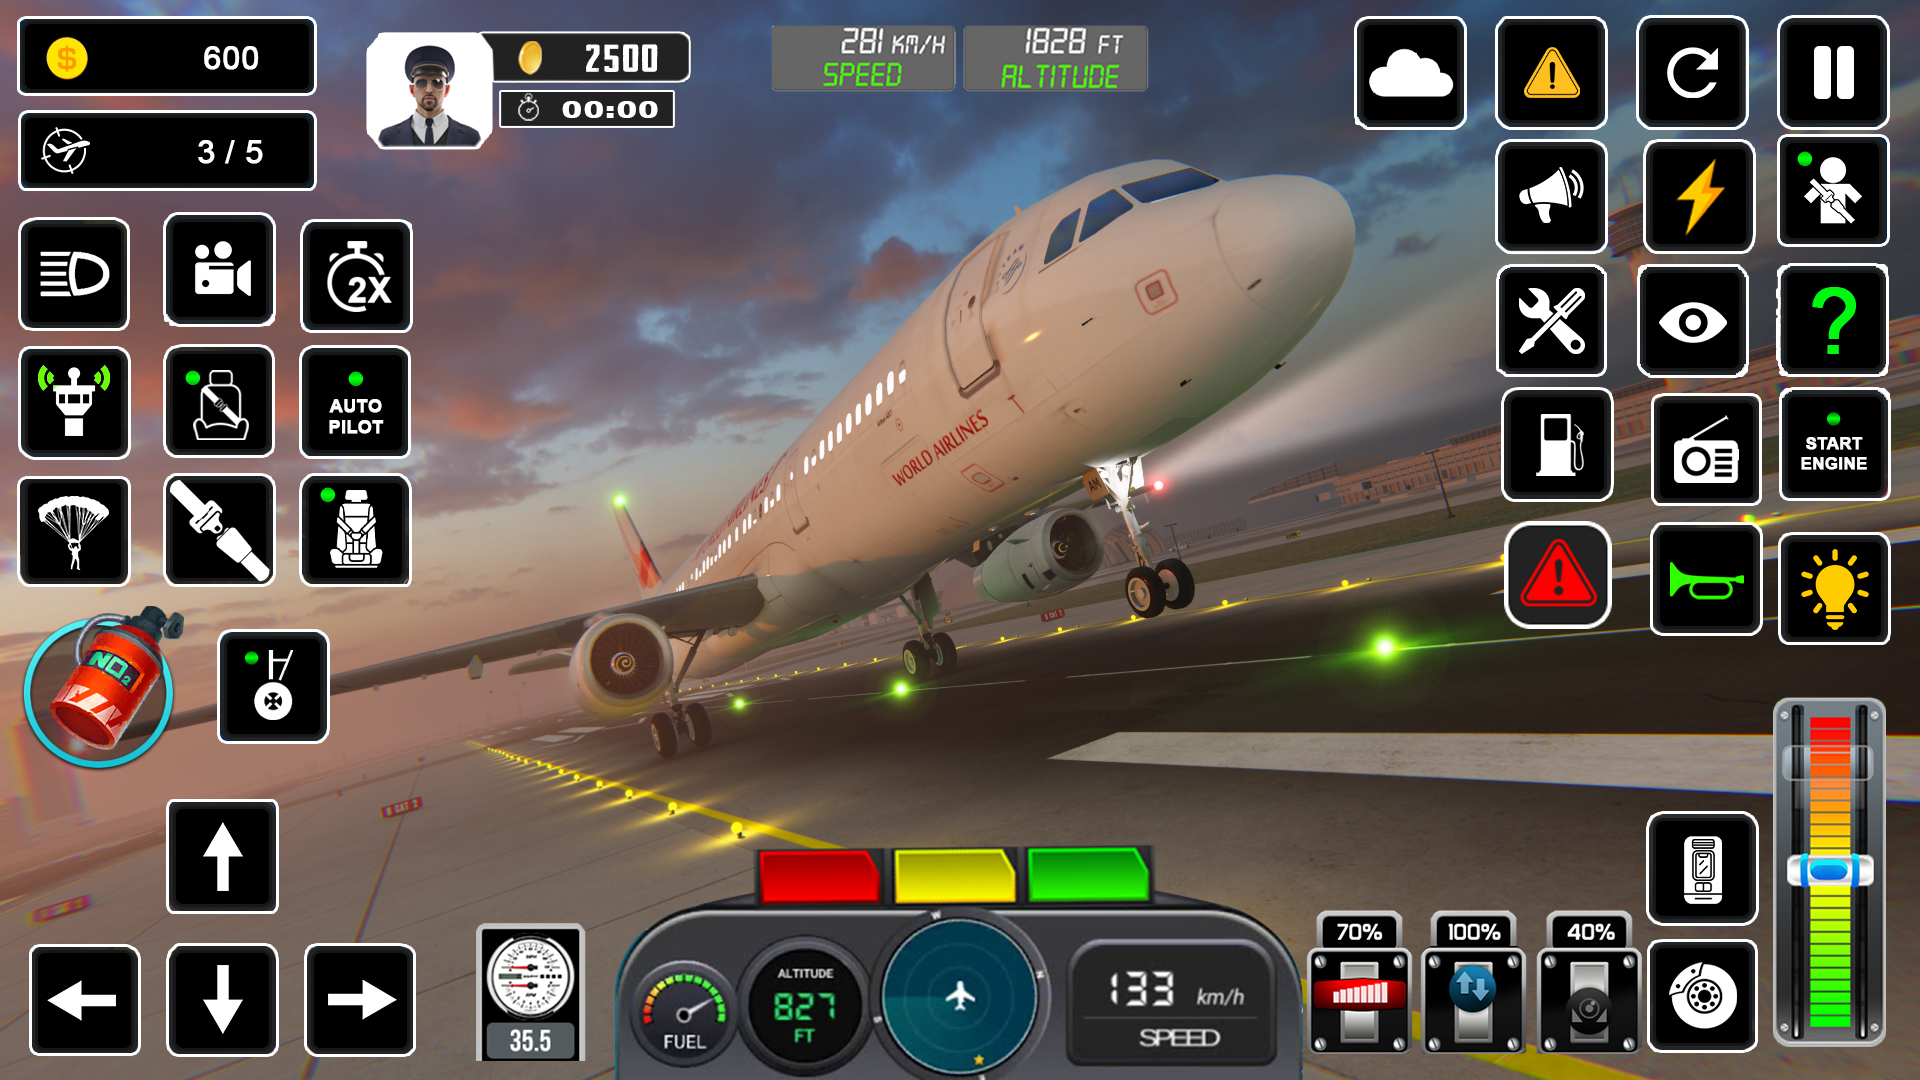 Screenshot 1 of piloto voo simulador jogos 6.2.2